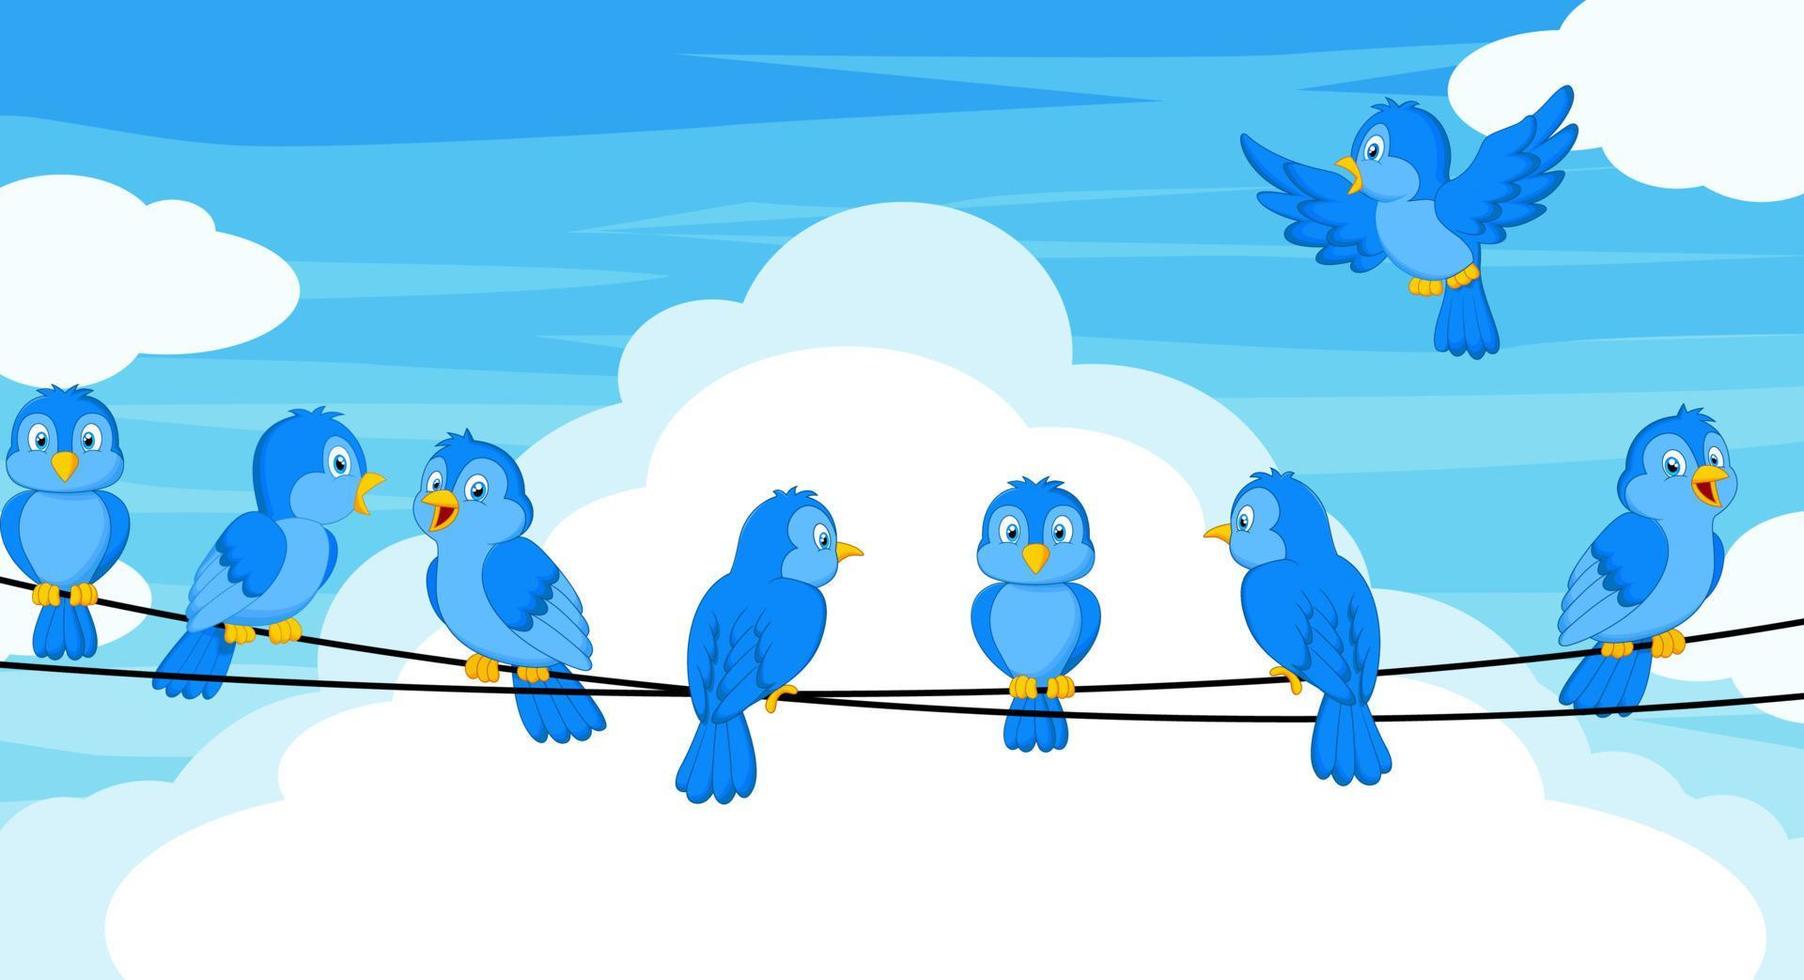 Set of blue bird cartoon sitting on wires vector